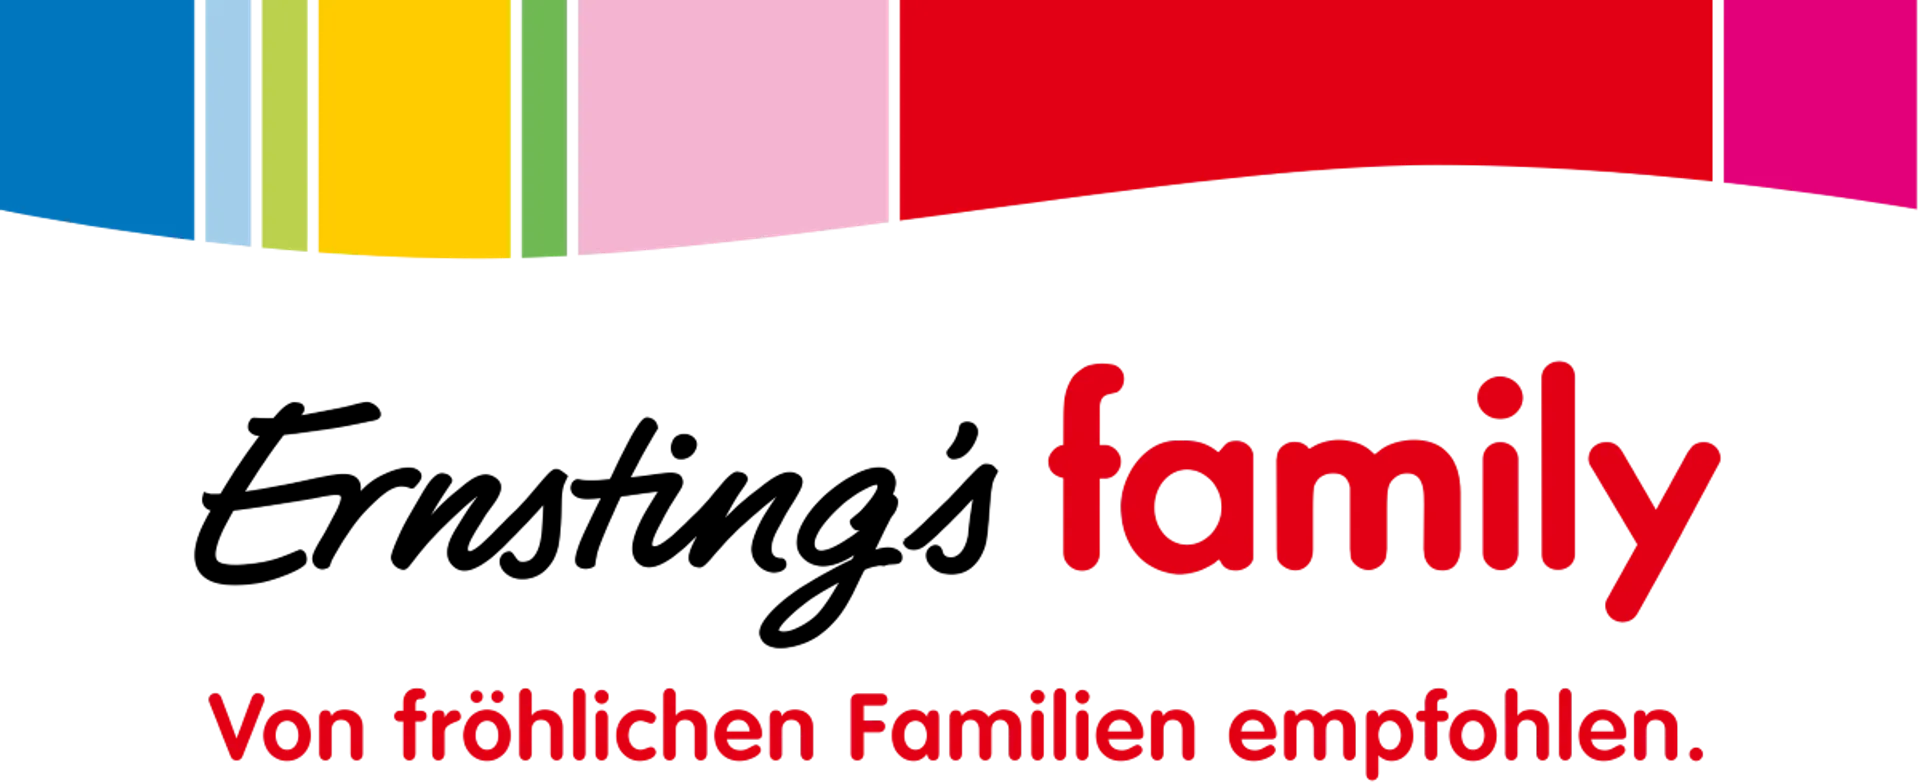 ERNSTING'S FAMILY logo die aktuell Flugblatt